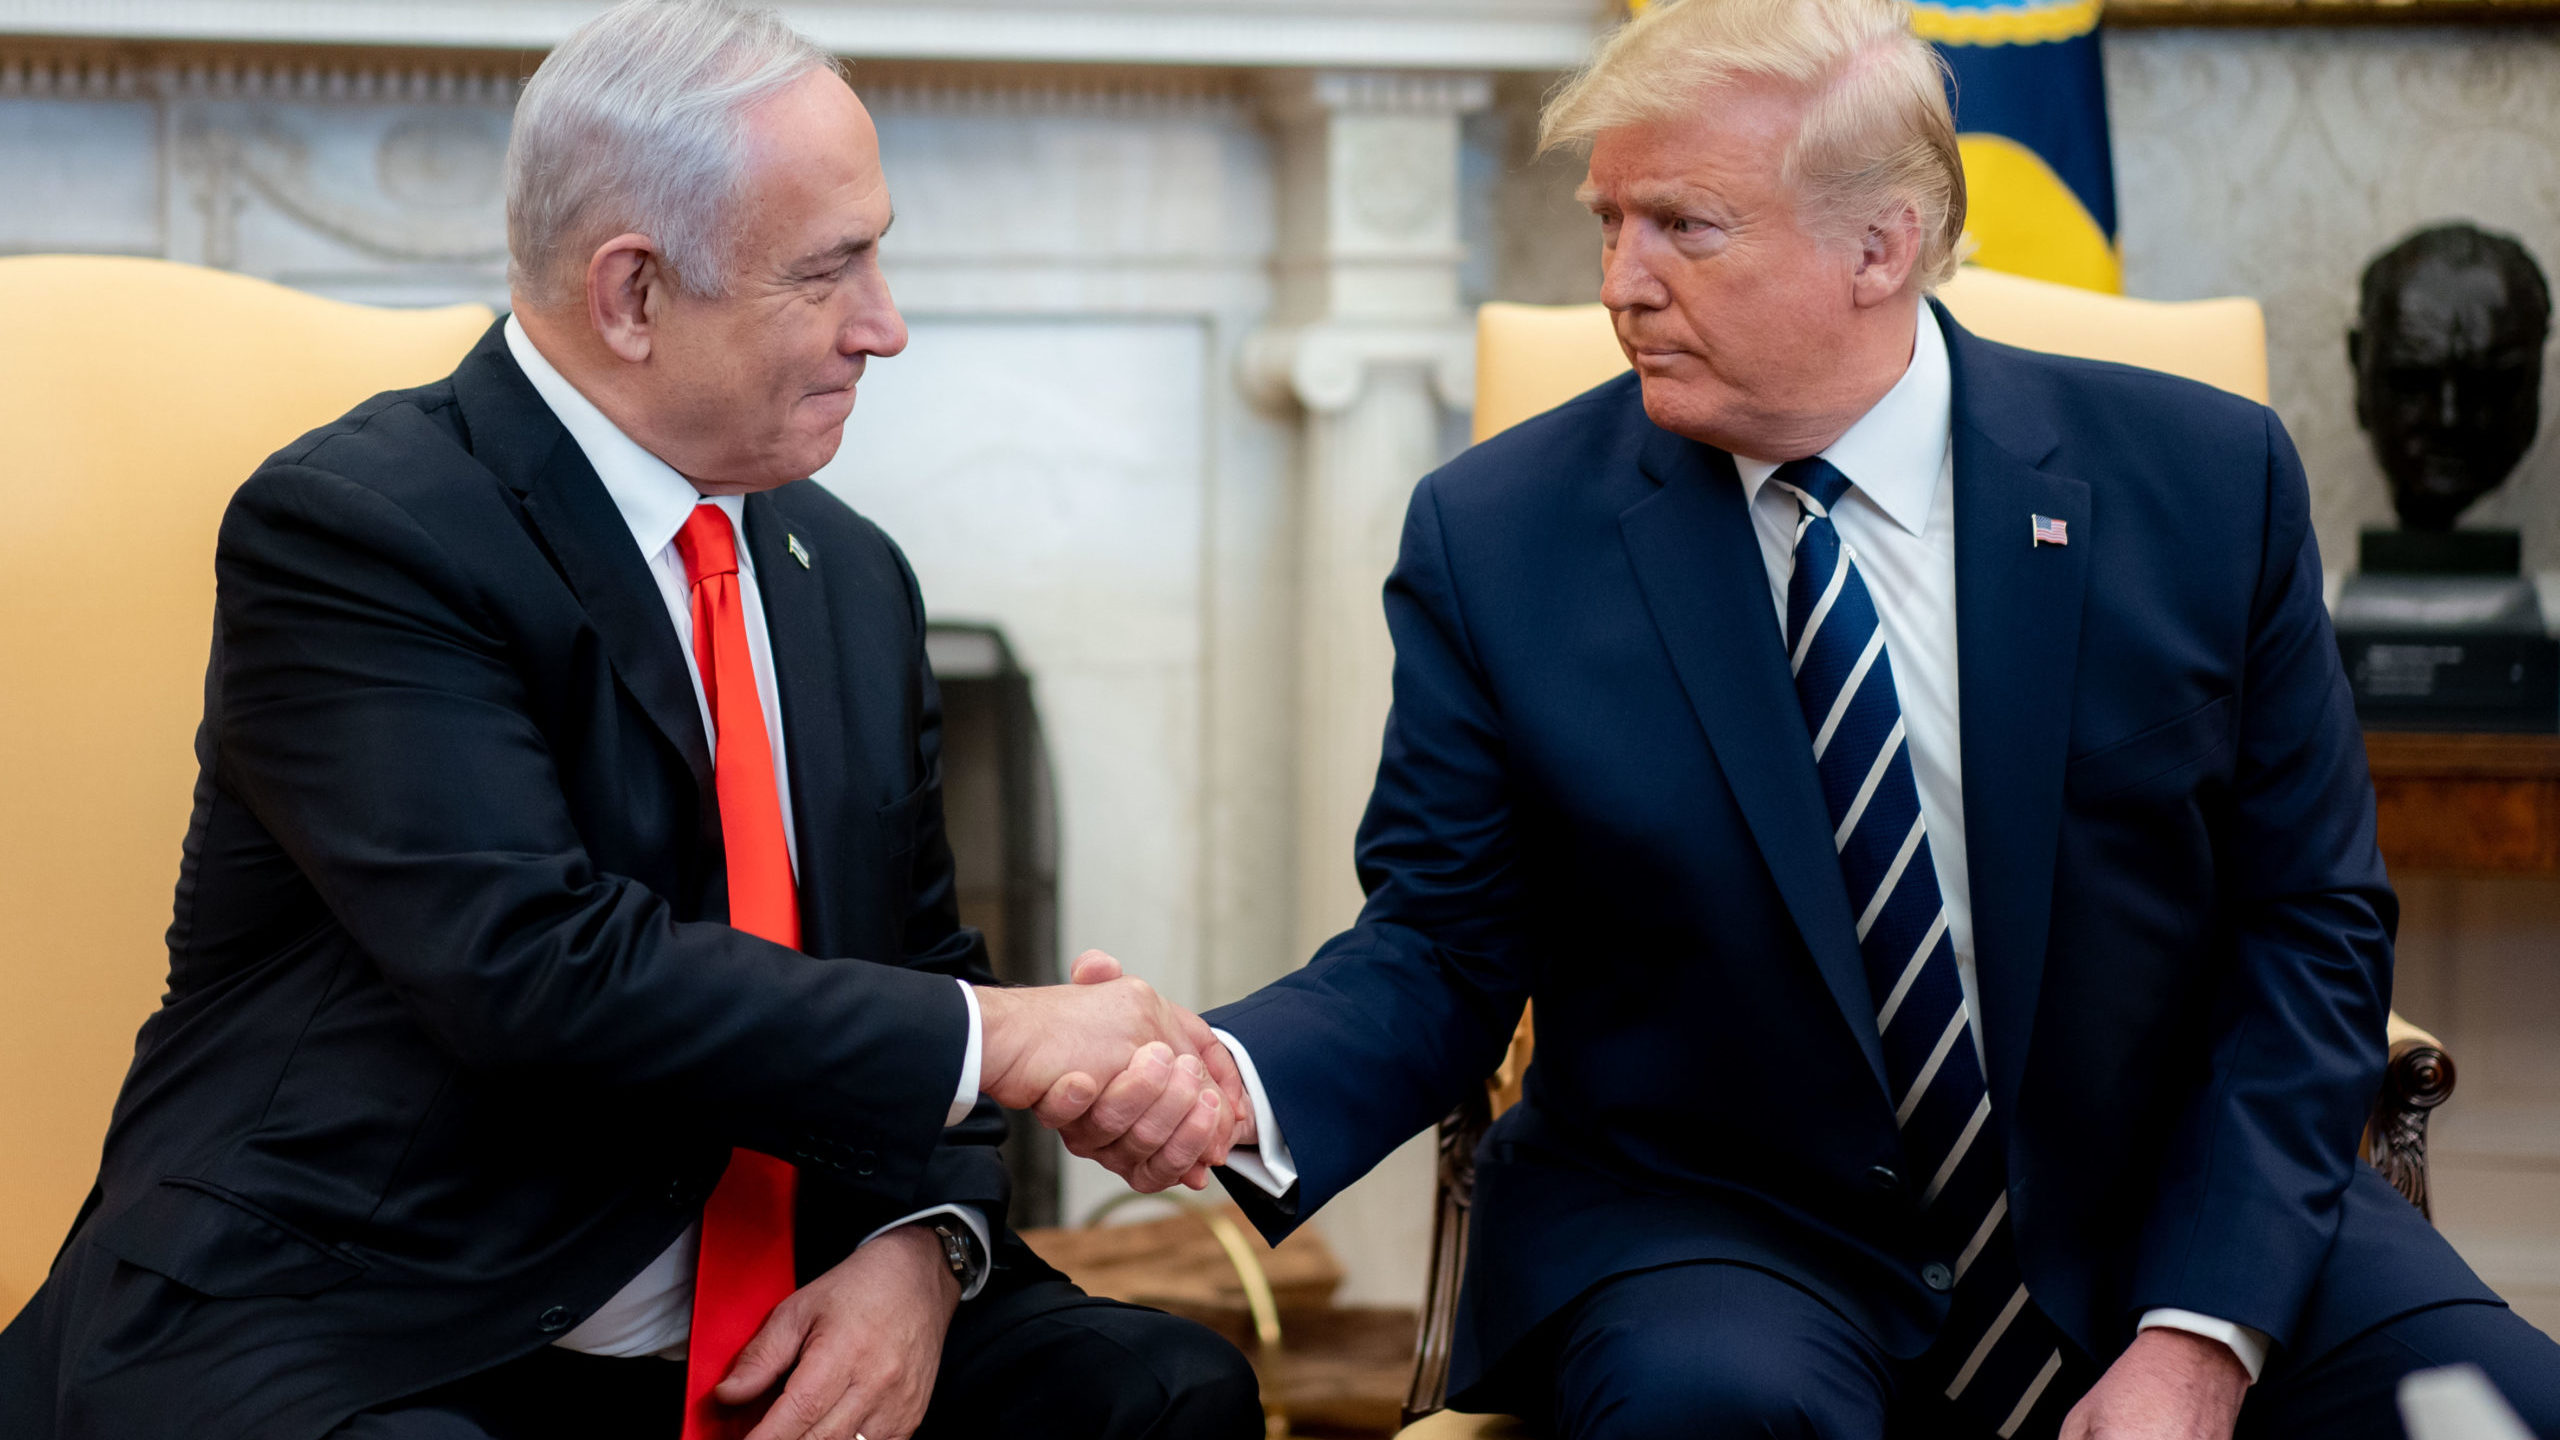 Former US President Trump Explicitly OK’ed Netanyahu Annexation Plan, Letter Reveals